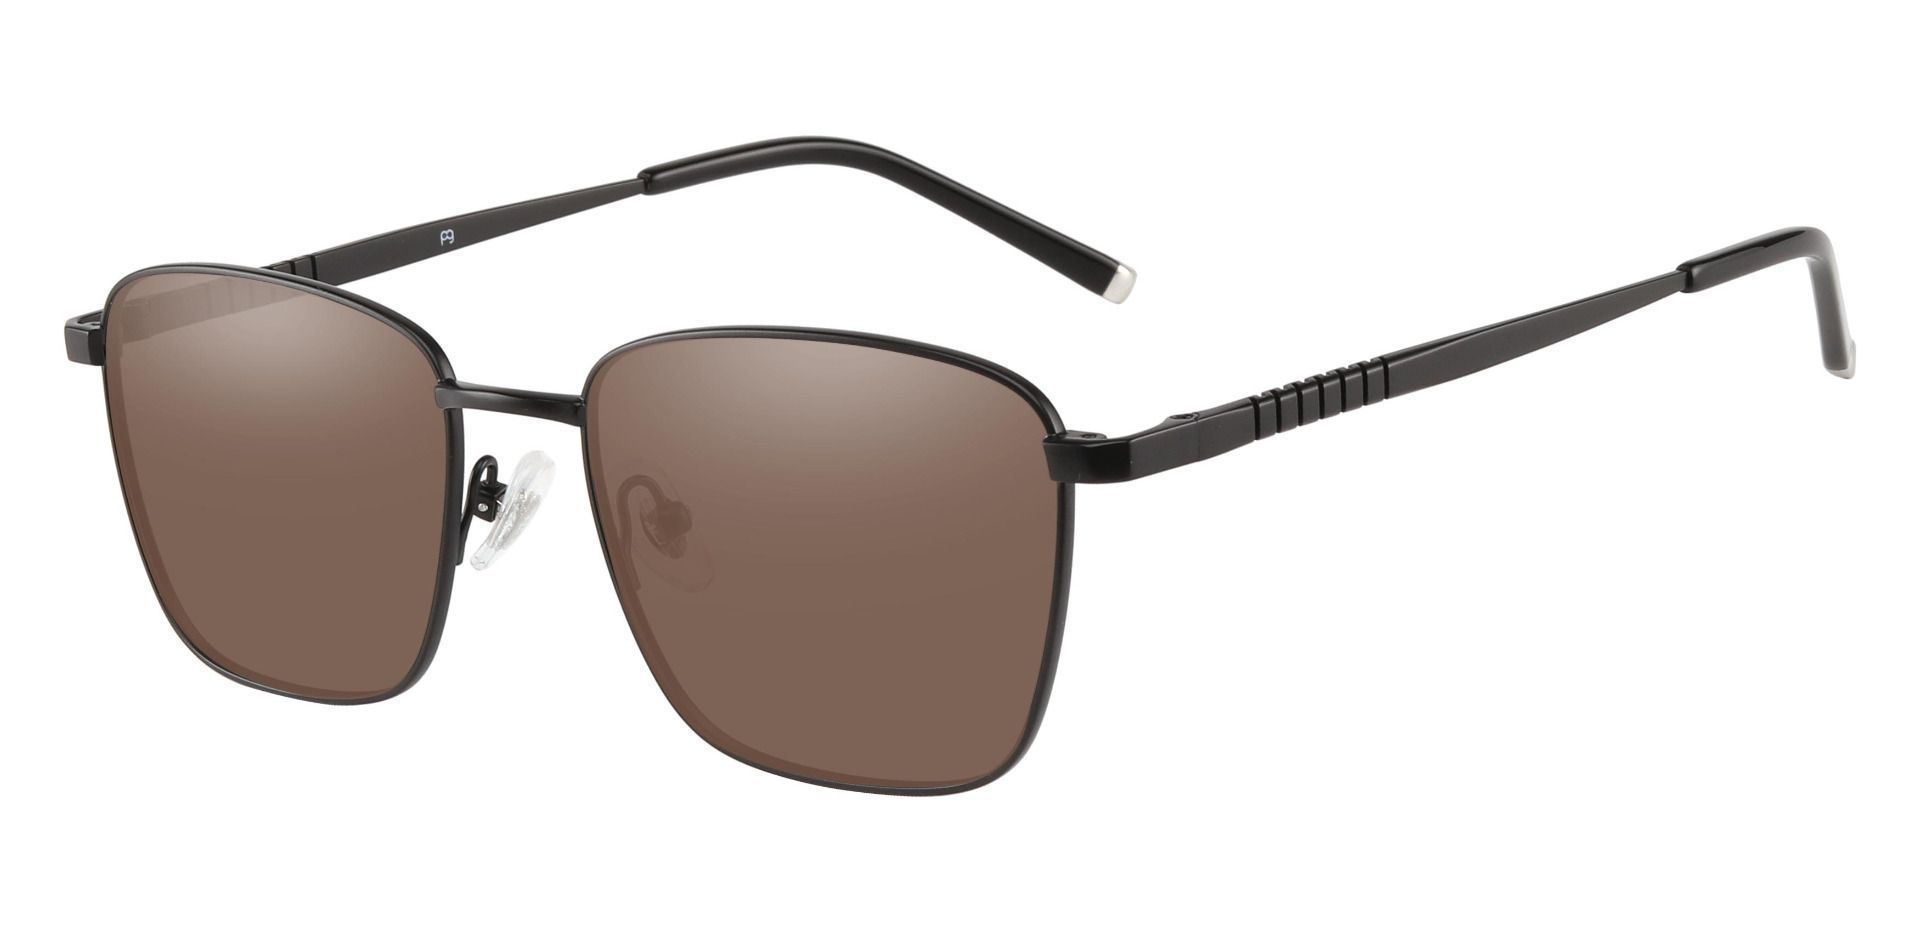 May Square Progressive Sunglasses - Black Frame With Brown Lenses